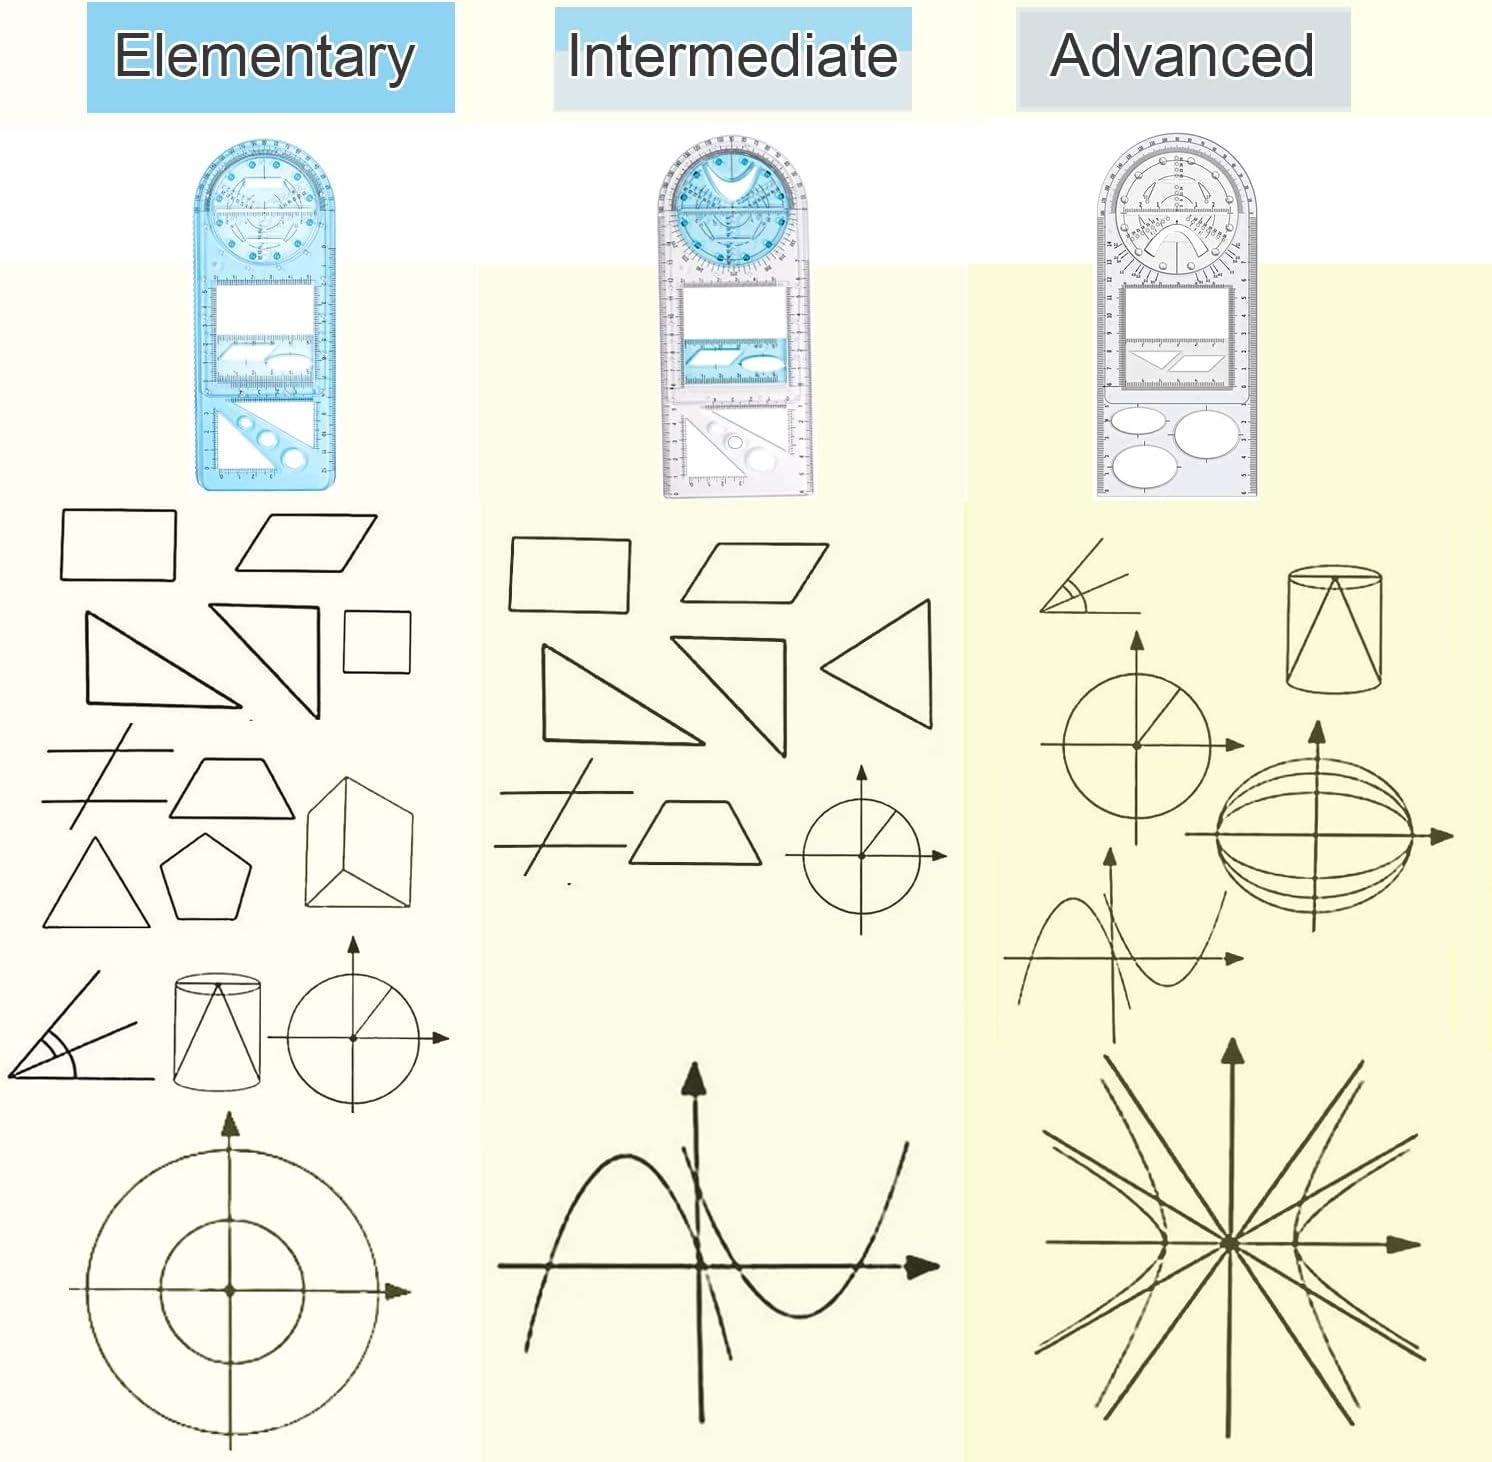 Multifunctional Geometric Ruler Clearance, Geometric Drawing Template  Measuring Tool Plastic Mathematics Drawing Ruler, Draft Ruler for Student  School